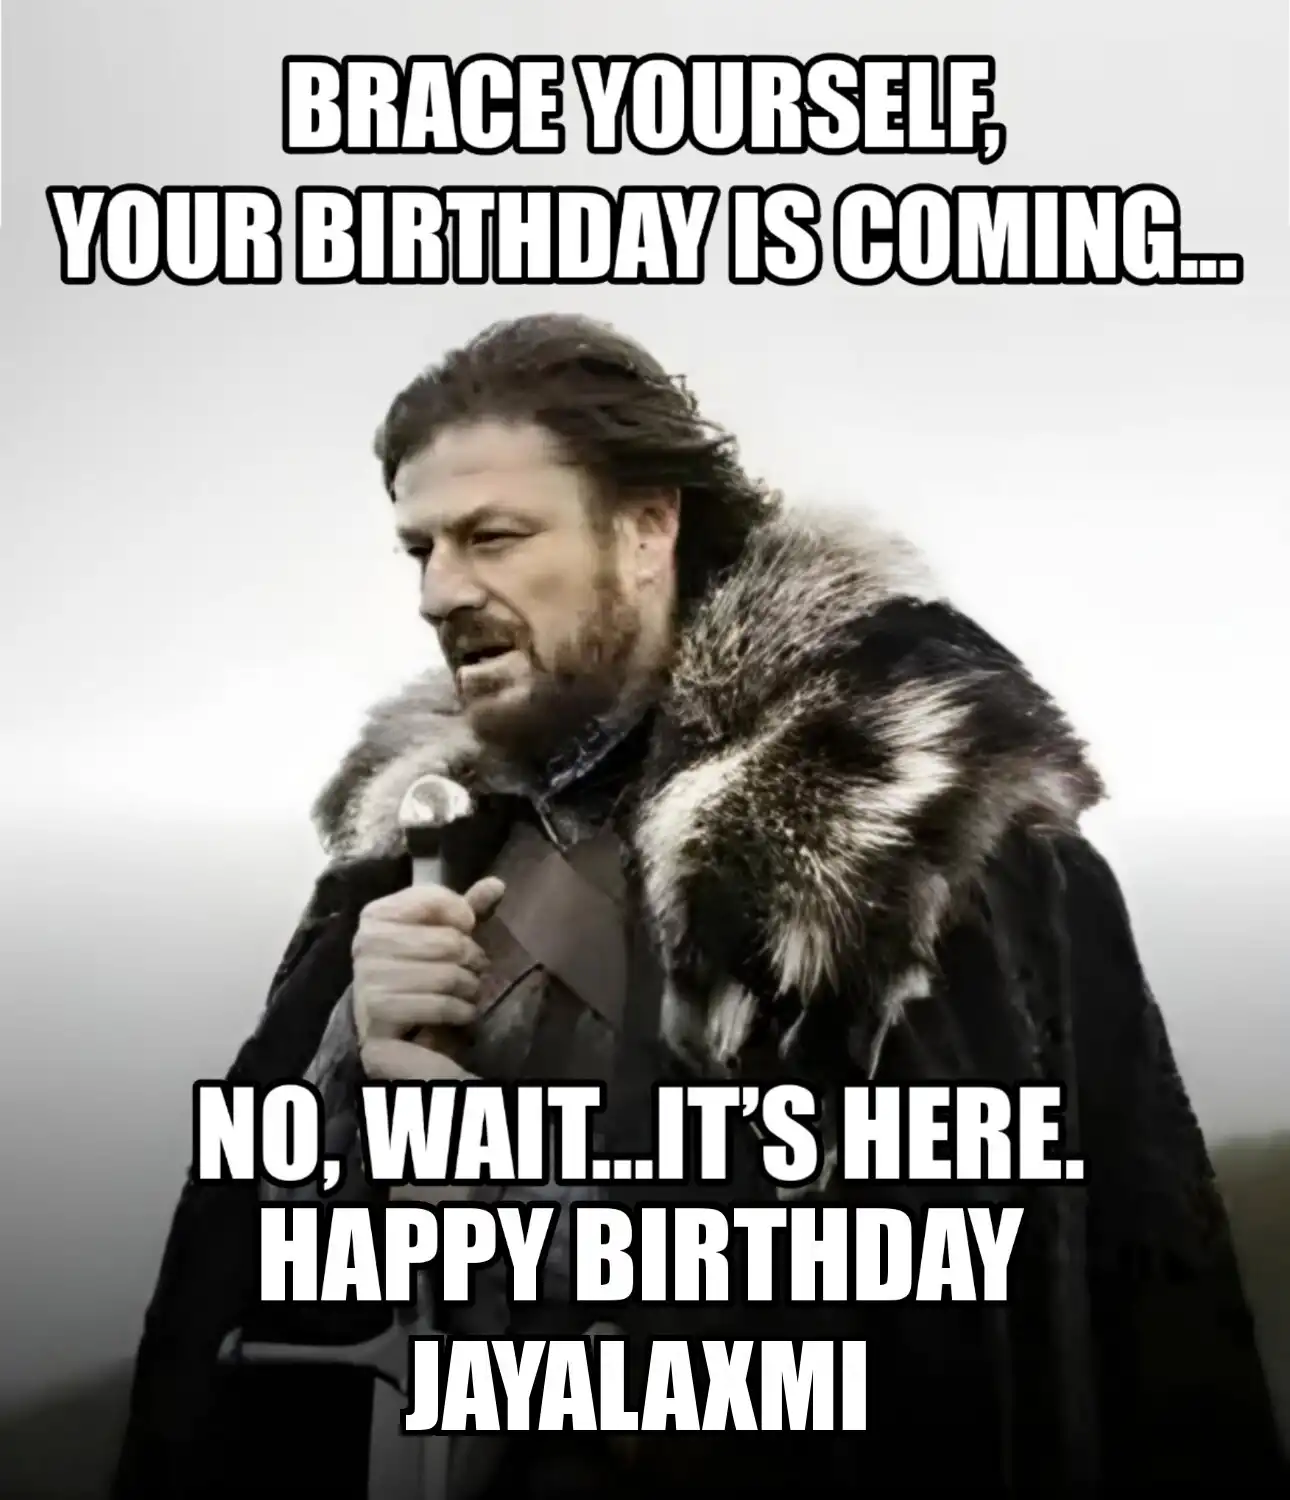 Happy Birthday Jayalaxmi Brace Yourself Your Birthday Is Coming Meme